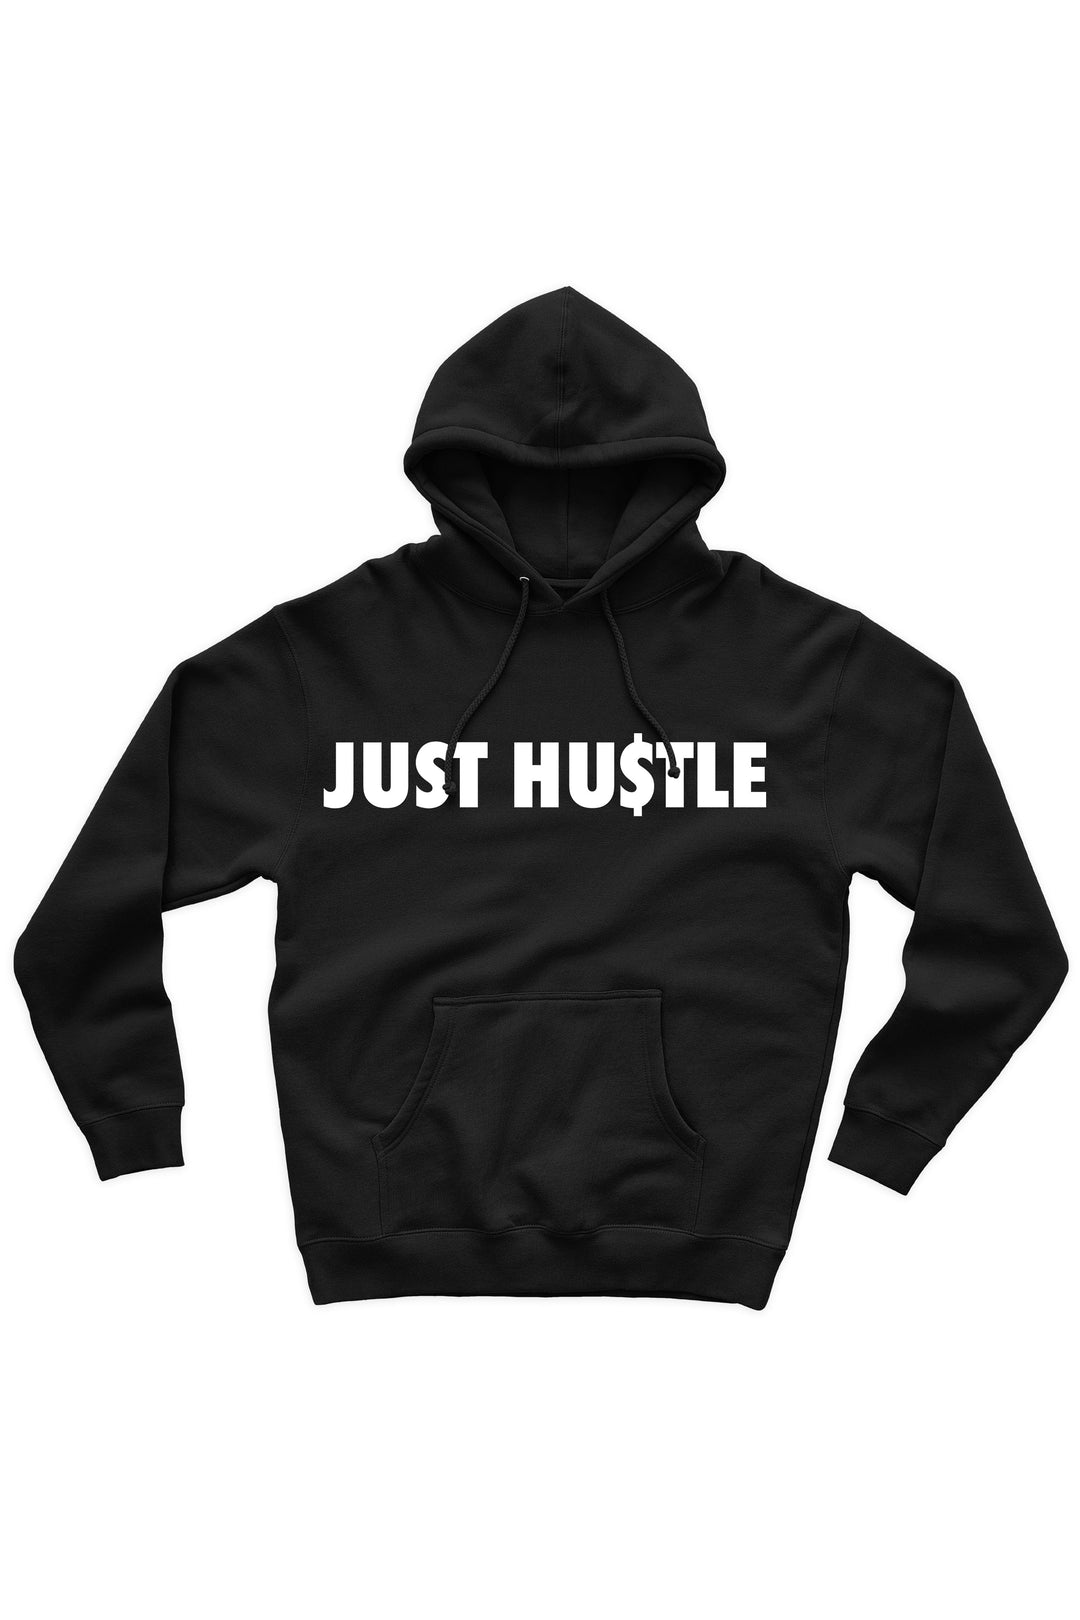 Just Hu$tle Hoodie (White Logo) - Zamage